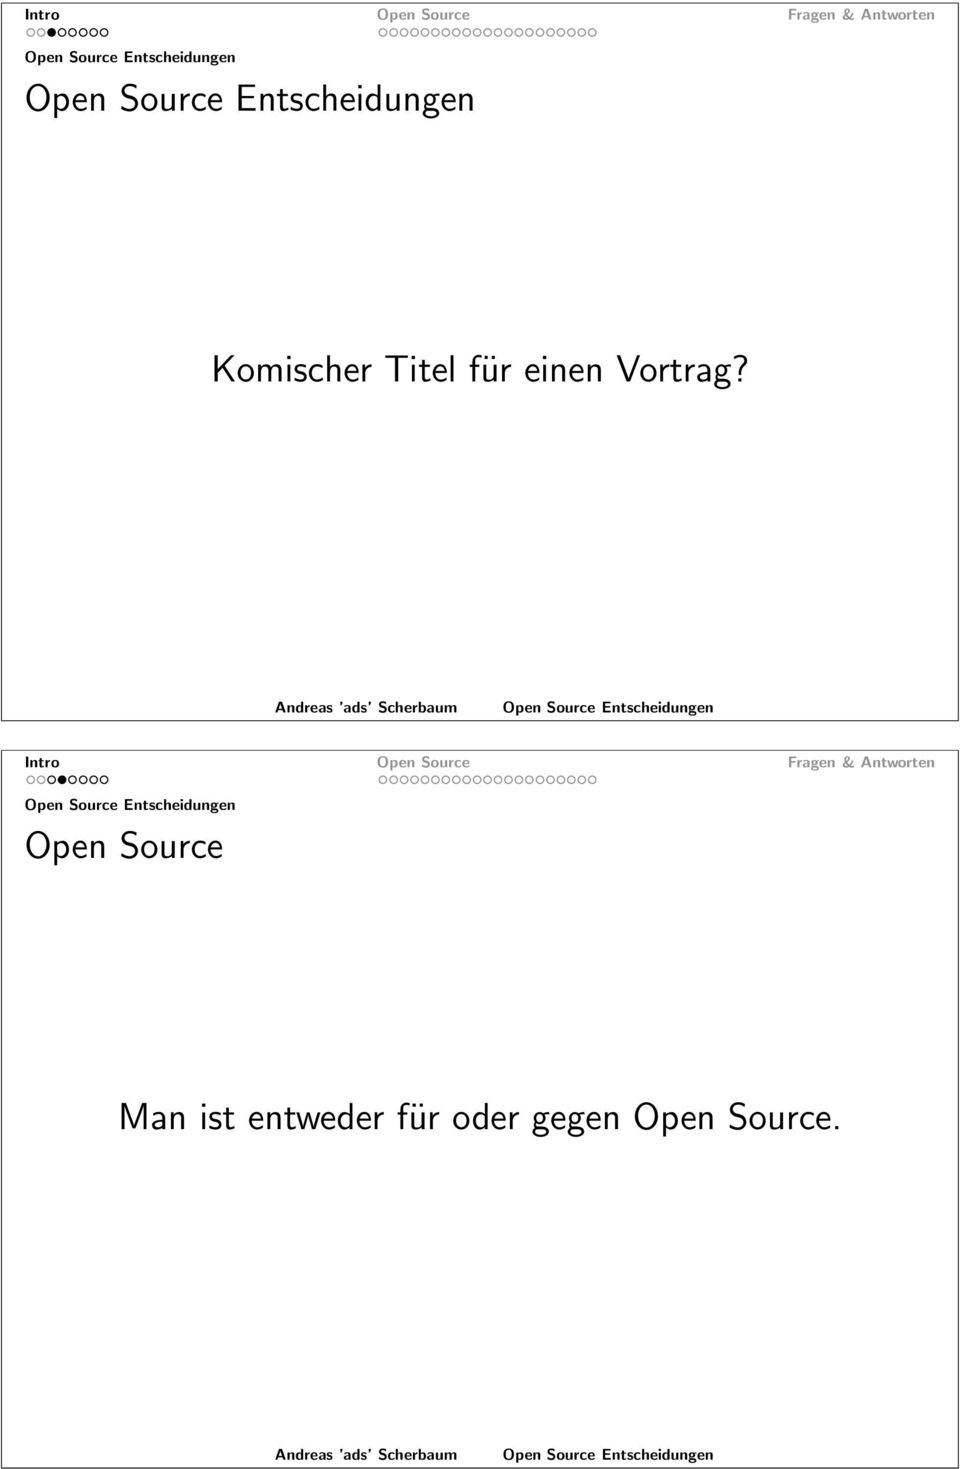 Intro Open Source Open Source